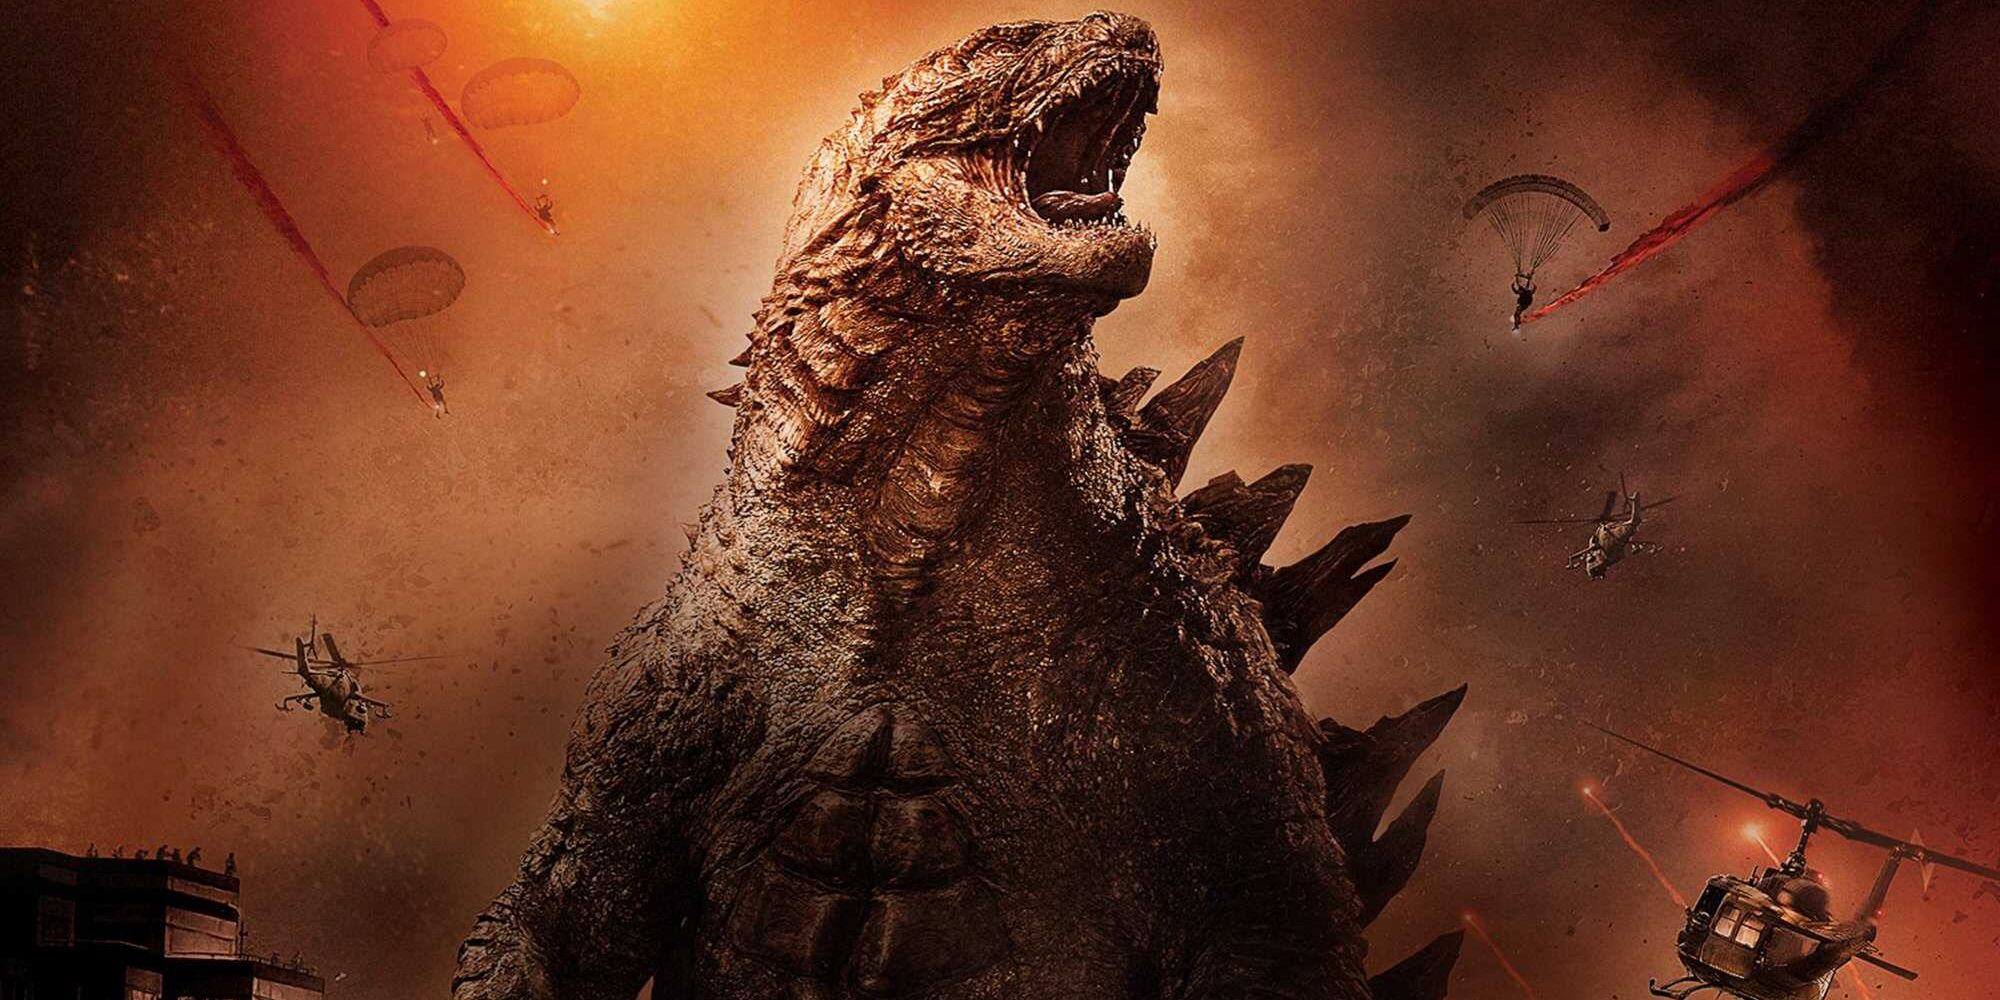 Godzilla wreaks havoc across a reddening sky in 2014's Godzilla.